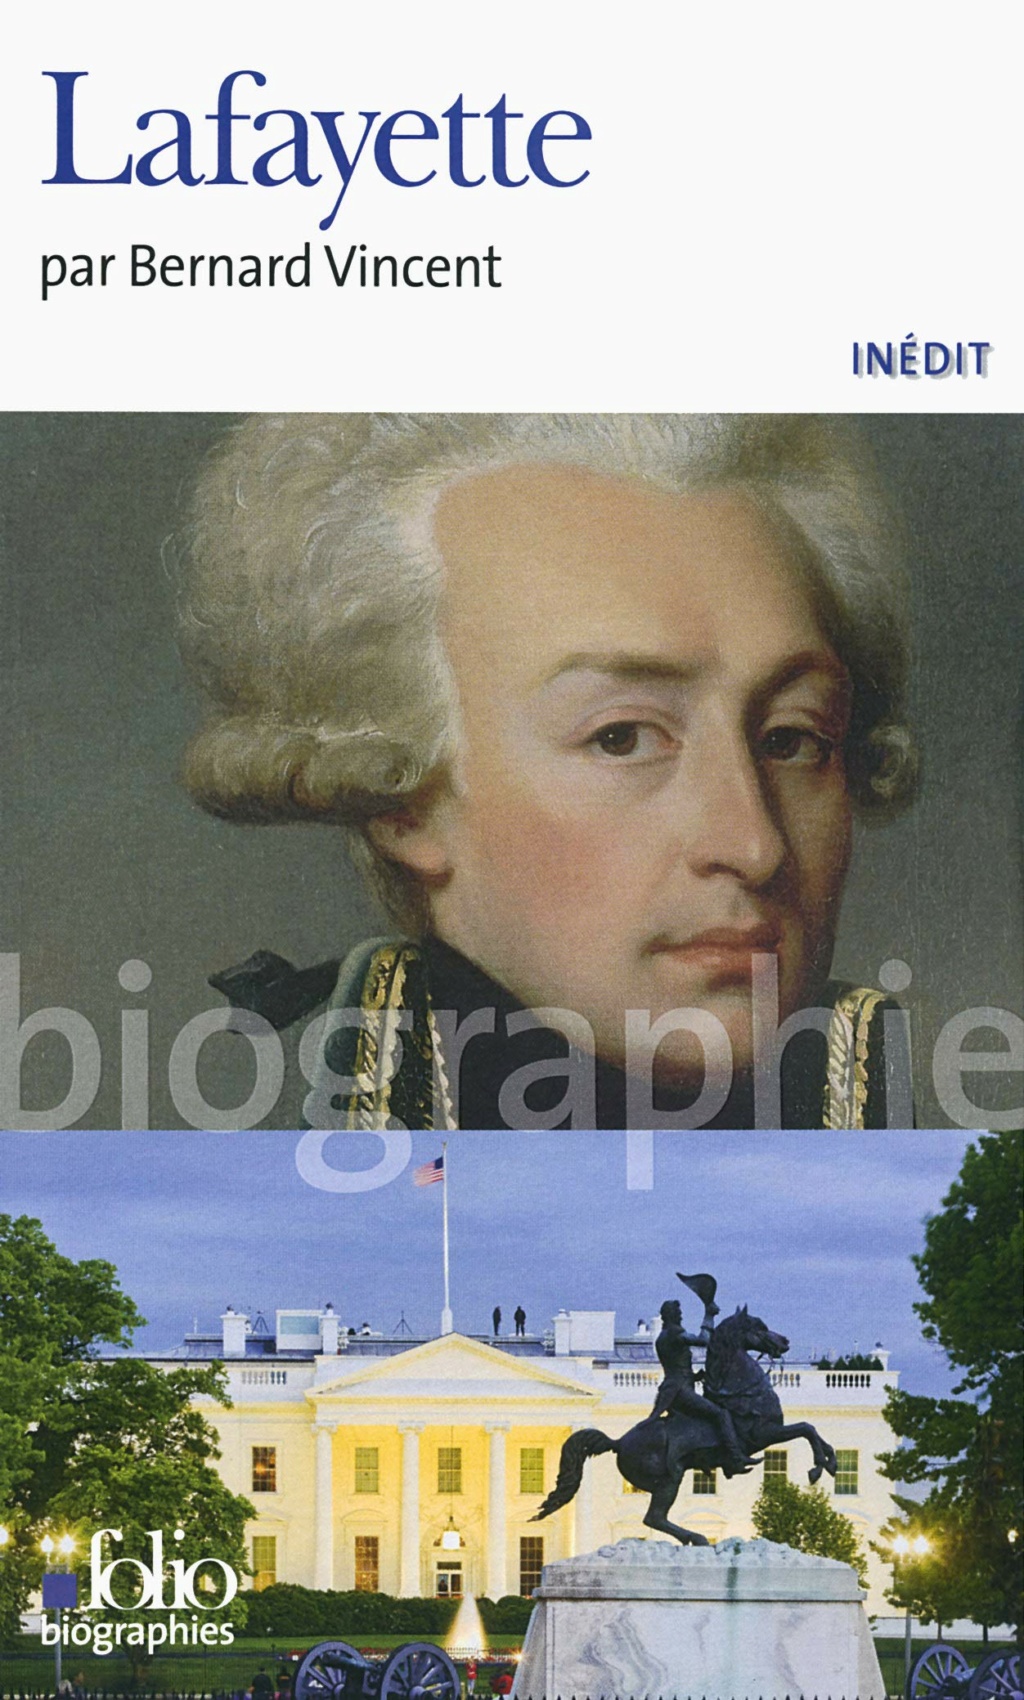 Lafayette de Bernard Vincent 81w6b510